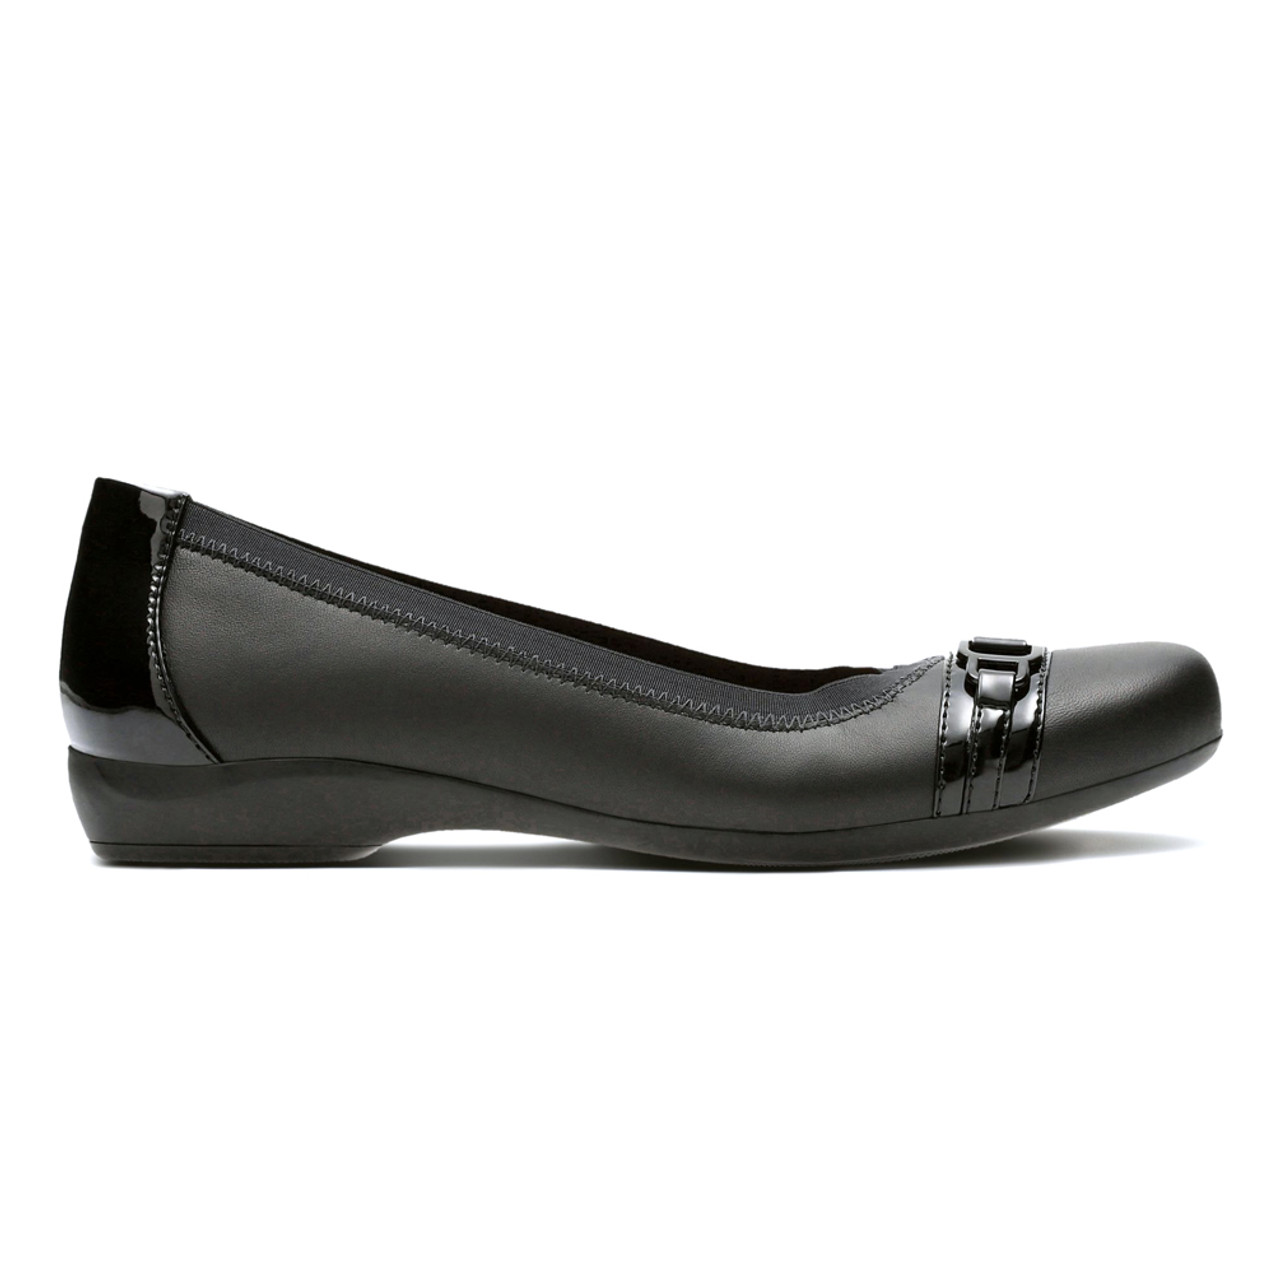 New Clarks Women's Kinzie Light Flat Black Combi 9.5 - Black Combi | Discount Ladies Shoes & More - Shoolu.com | Shoolu.com